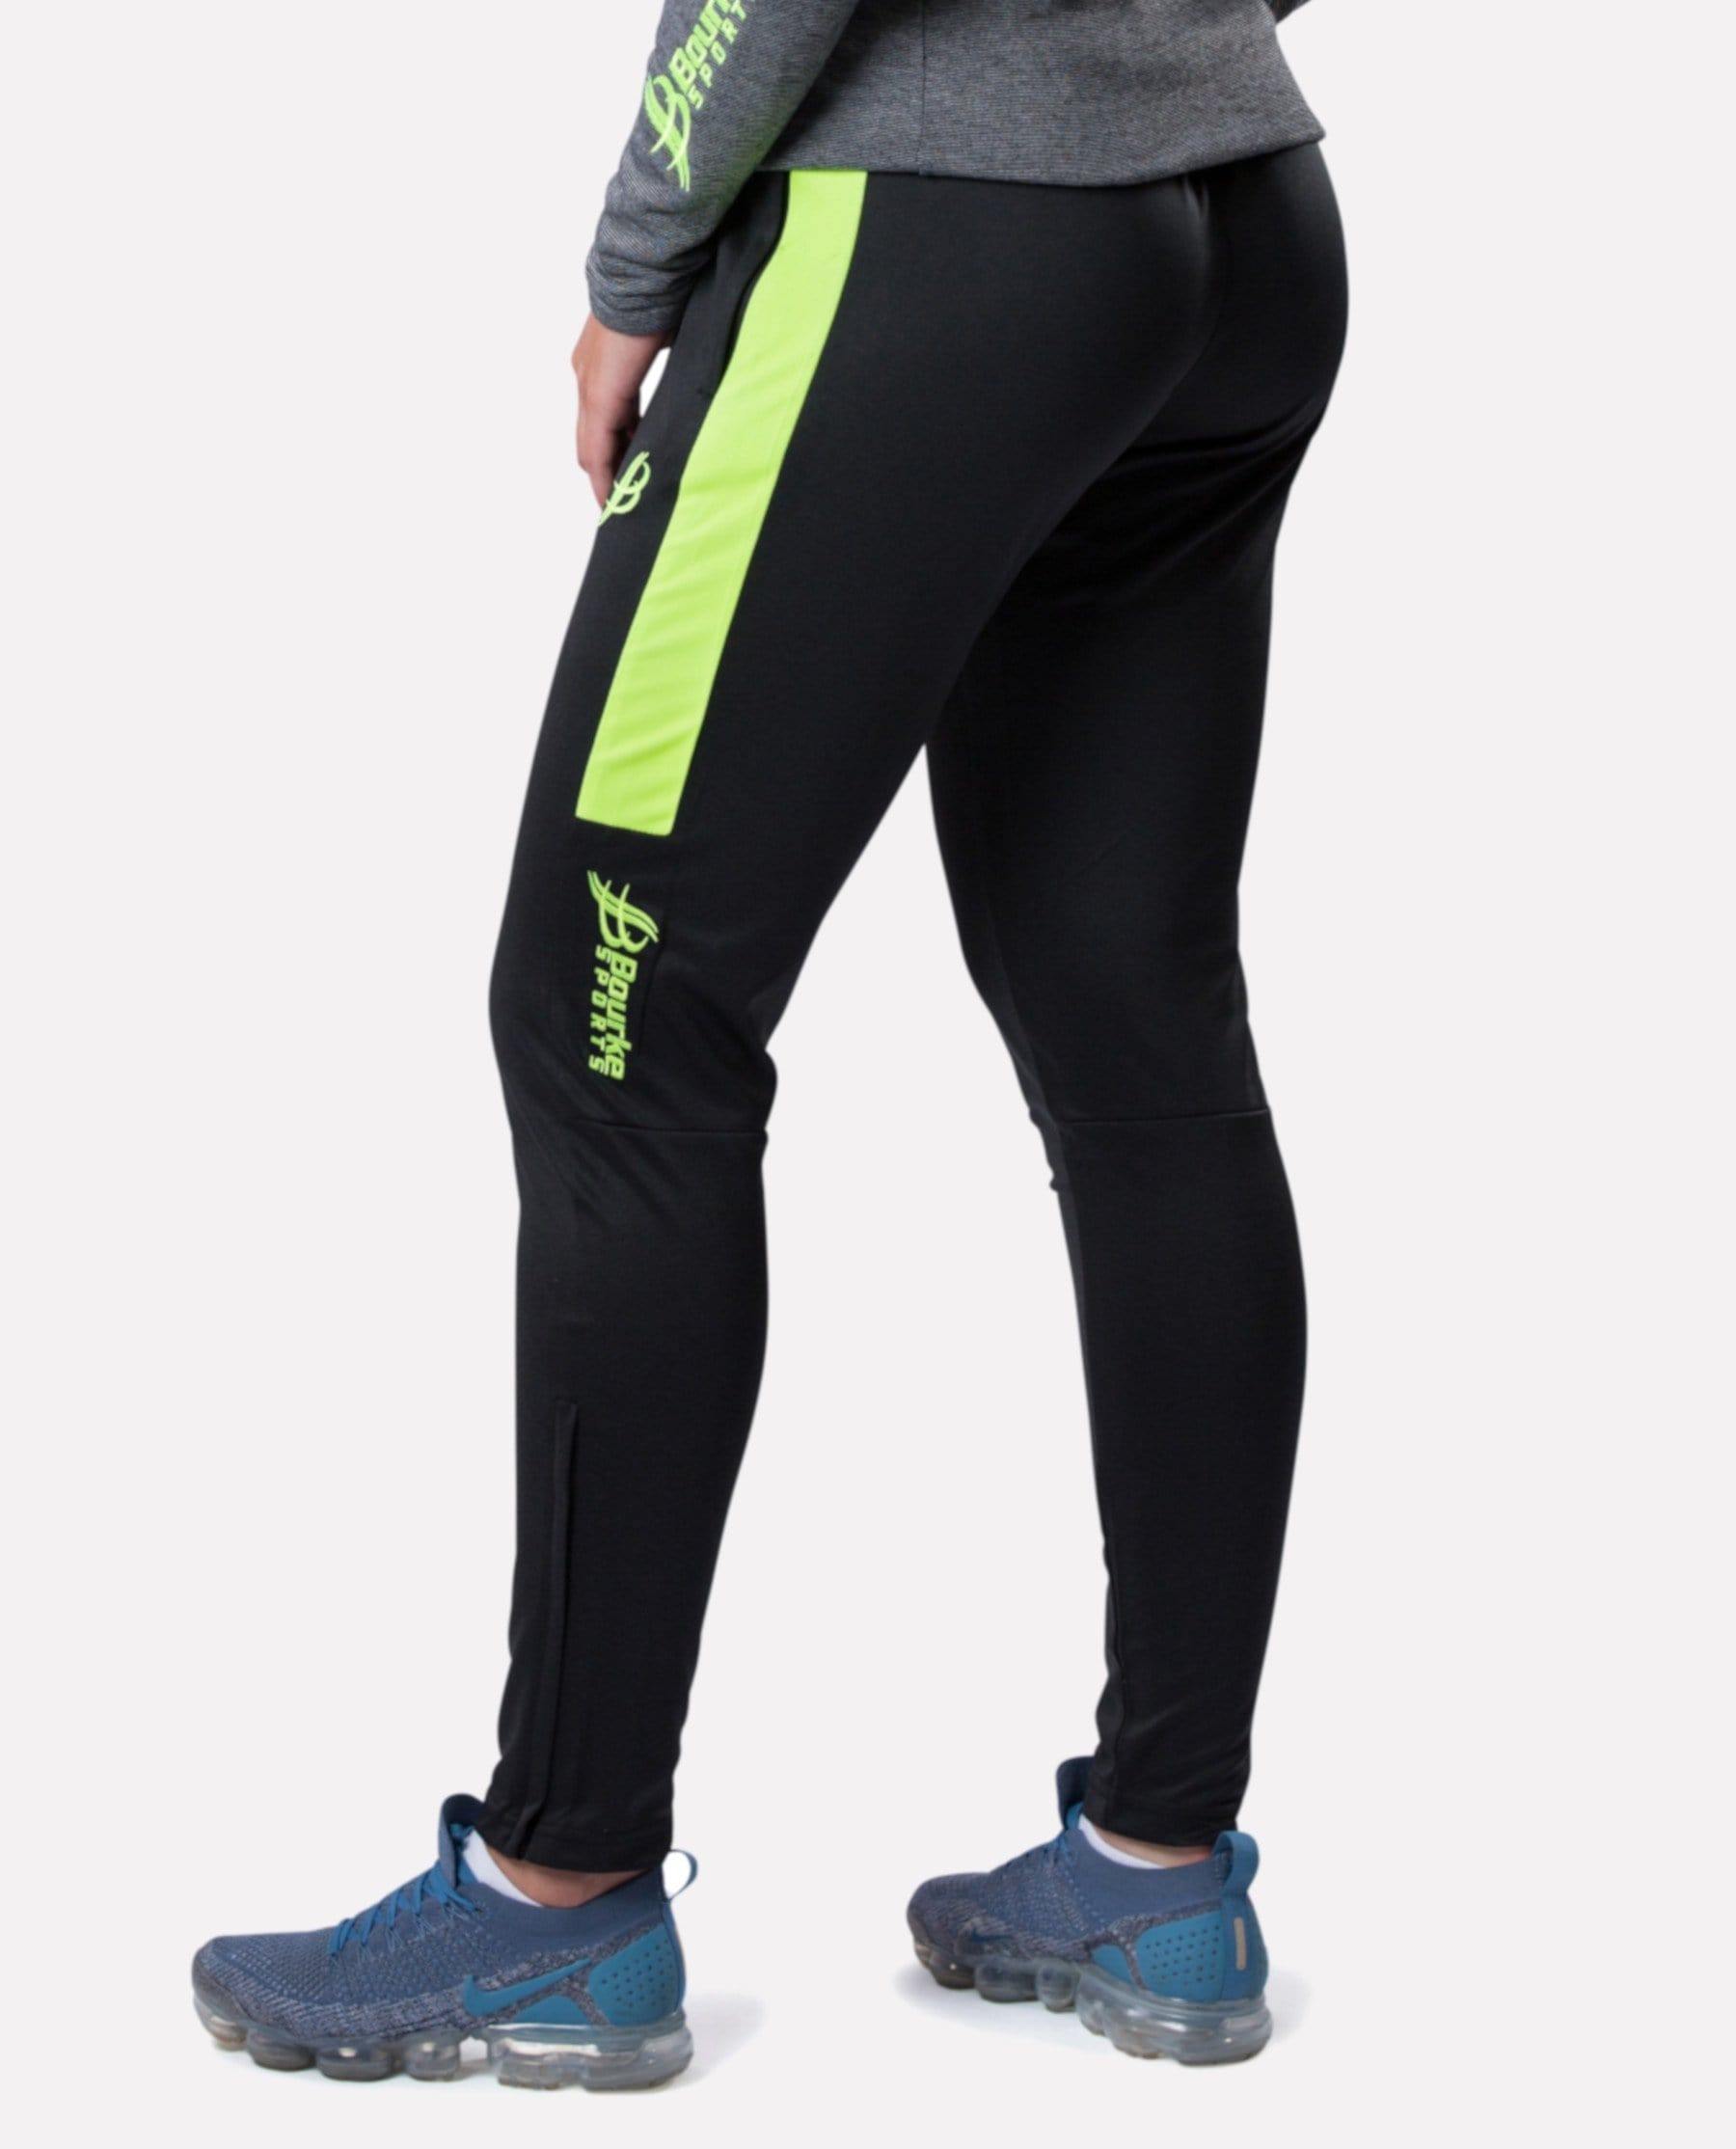 ALPHA Kids Skinny Pants (Black/Luminous) - Bourke Sports Limited